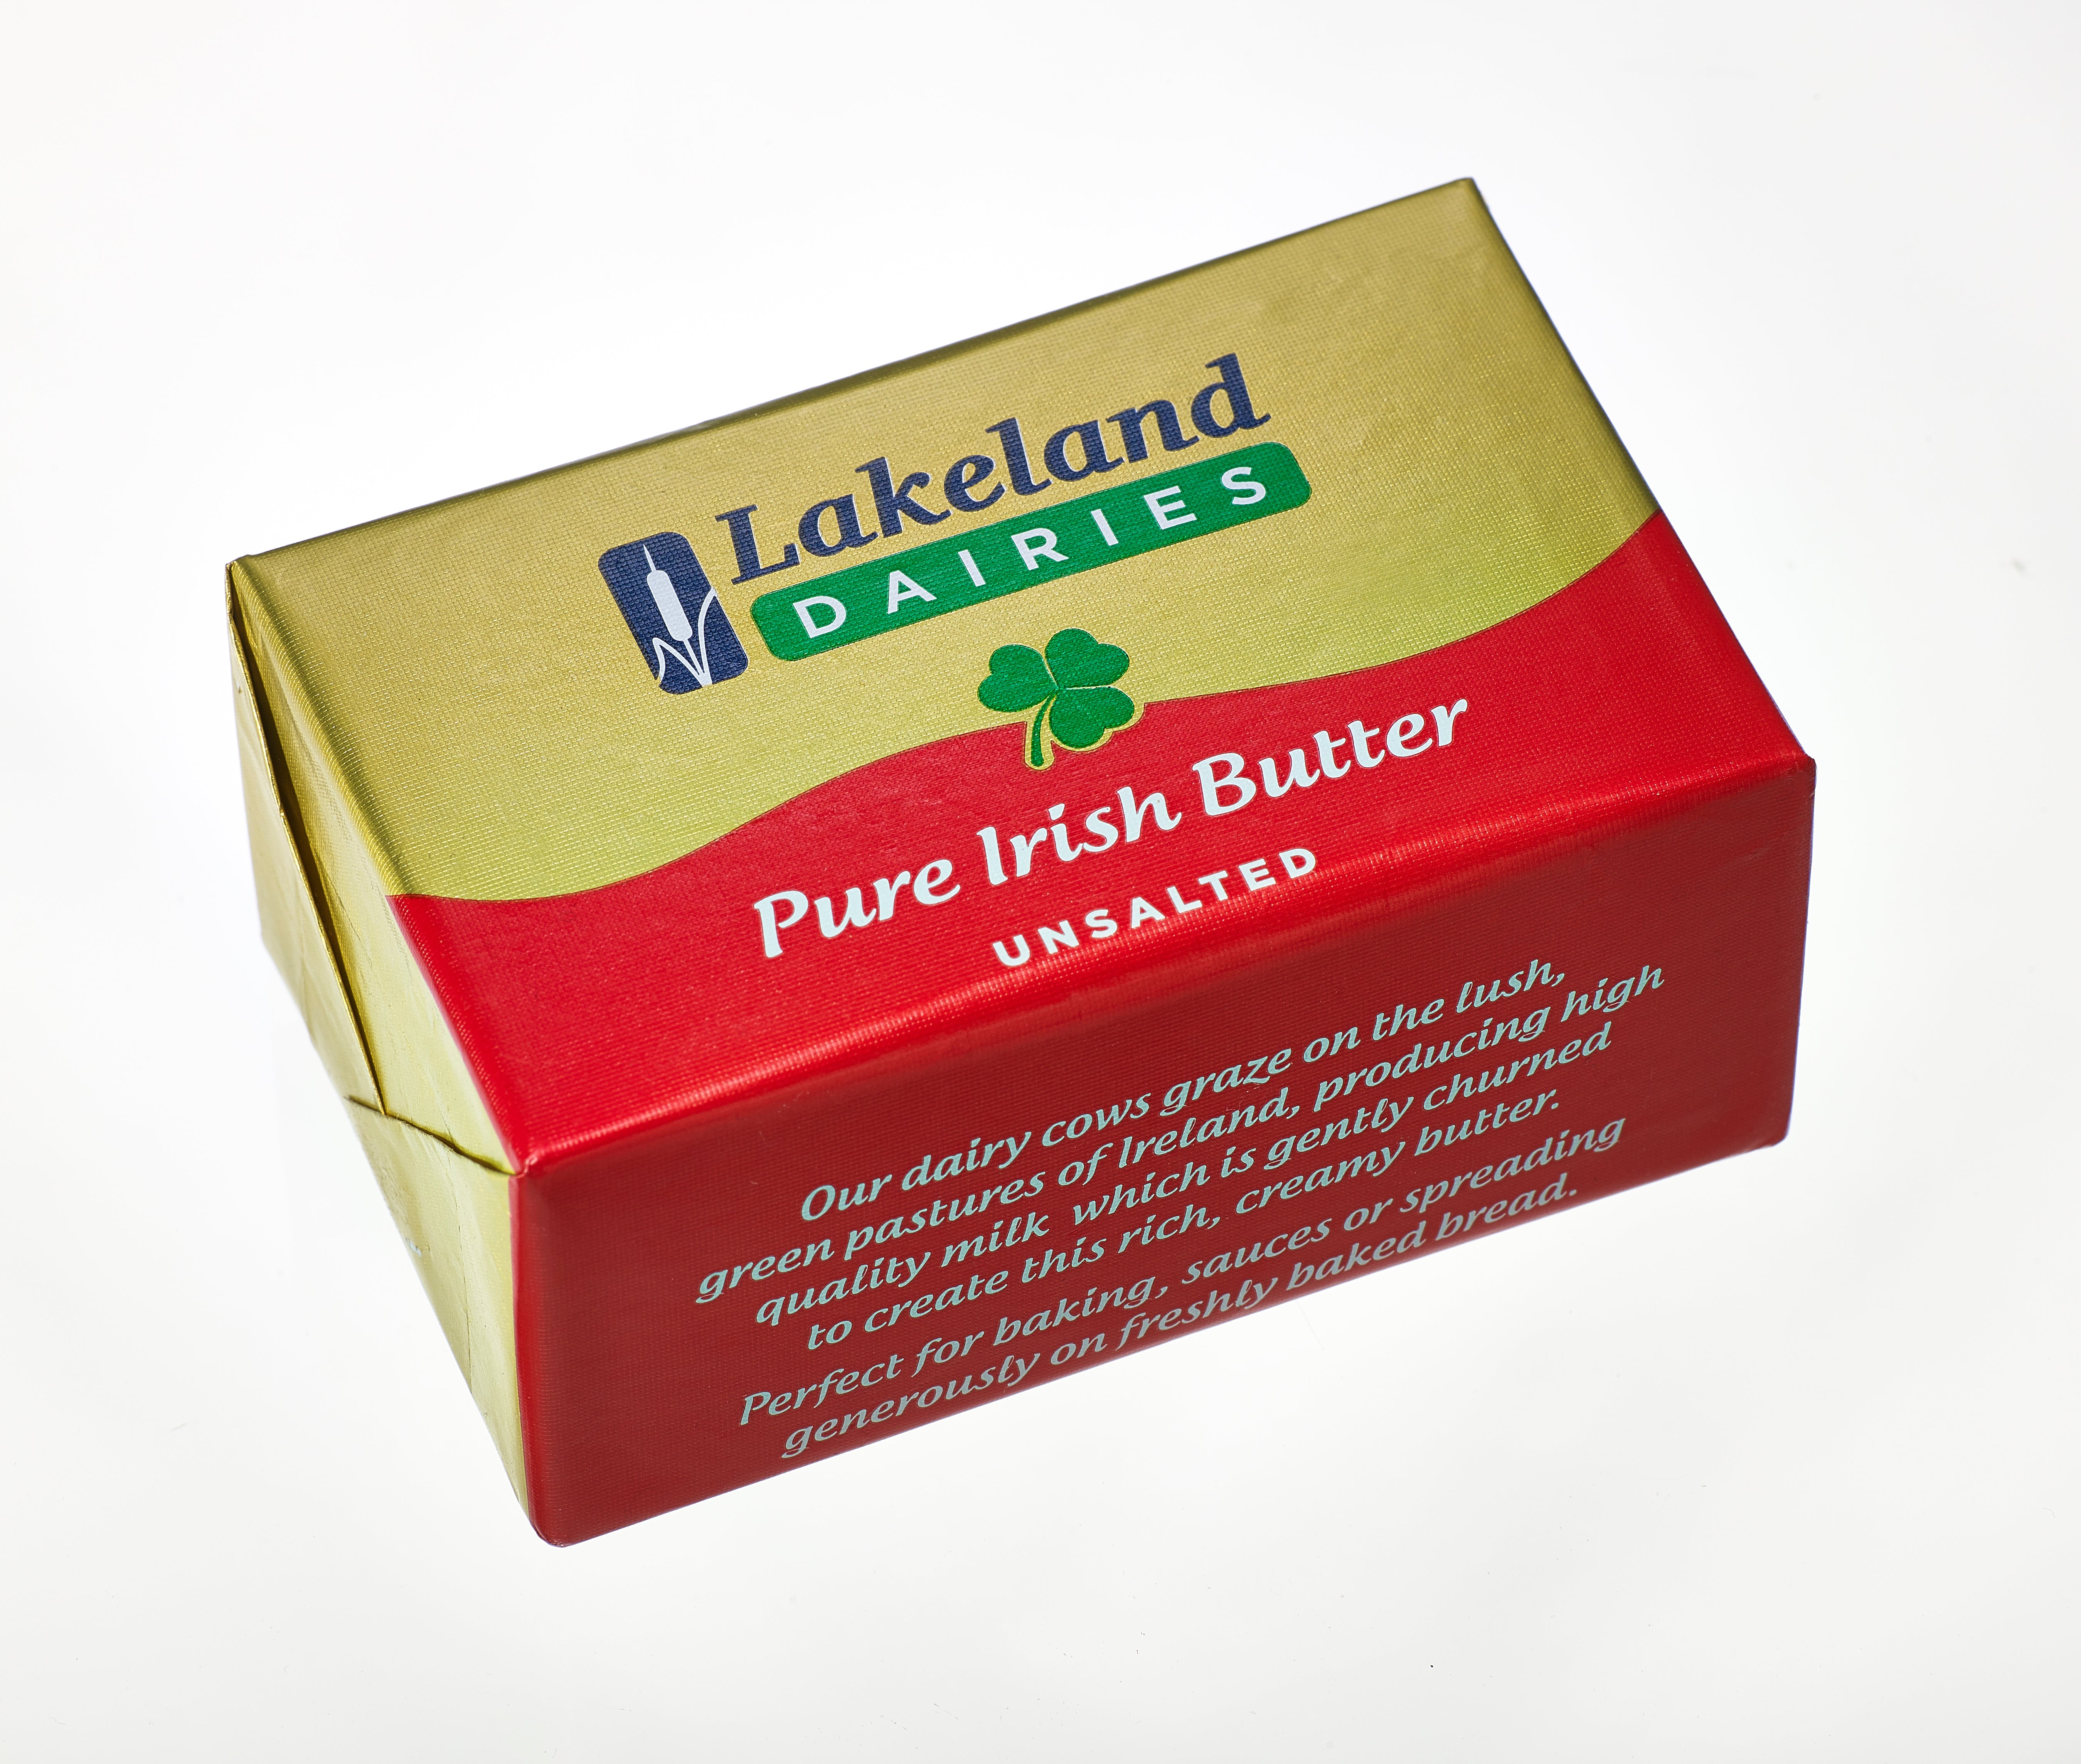 Butter, Lakeland Dairies (250g)